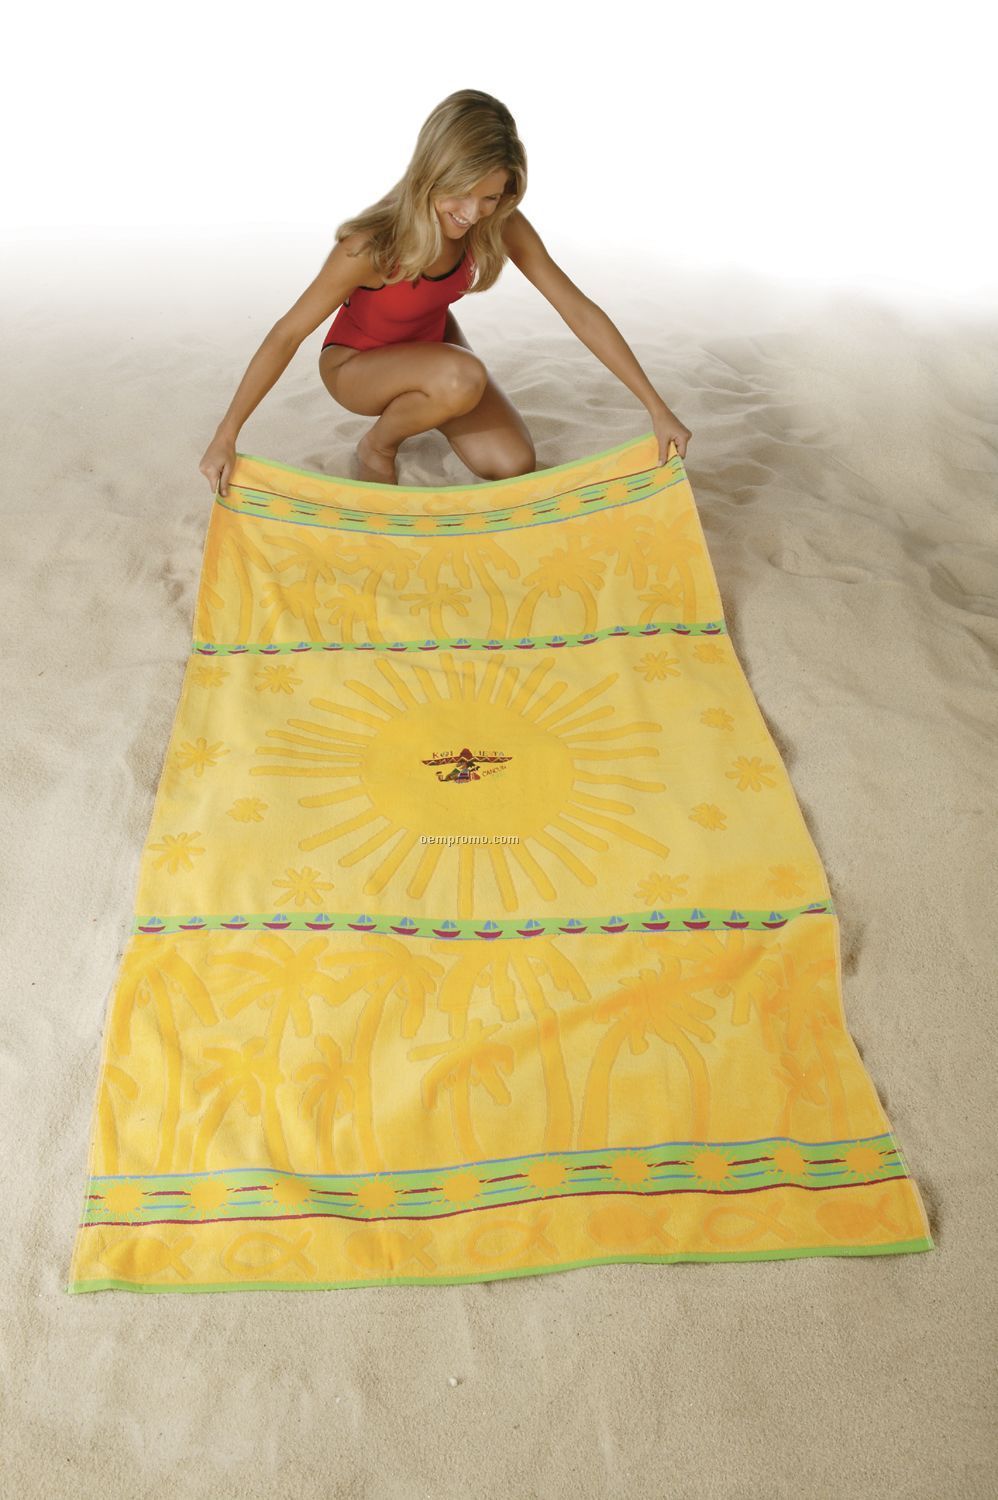 Blazing Sun Stock Woven Beach Towel - Embroidered